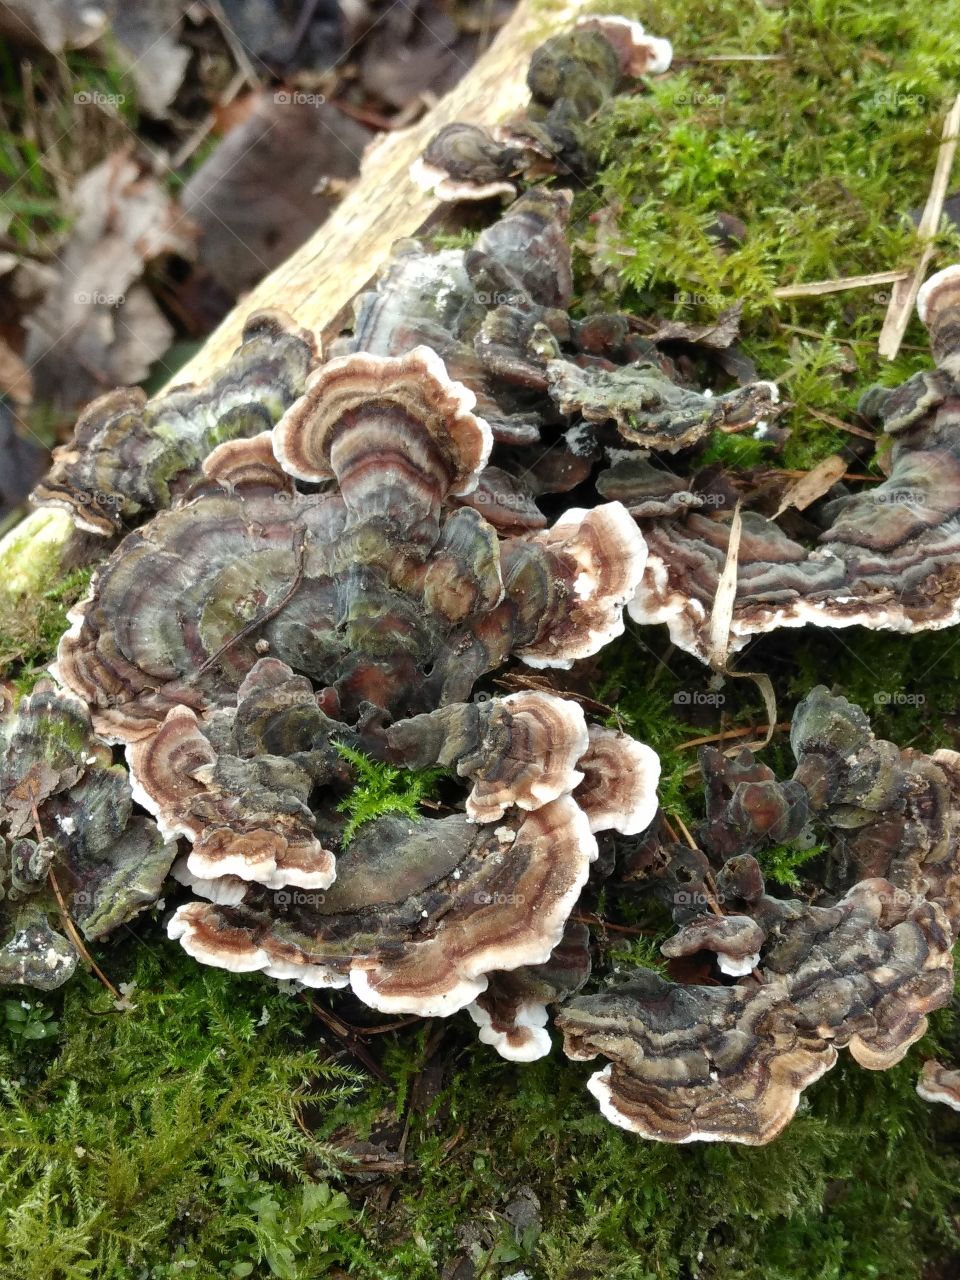 Tramestes versicolor (Turkeytail fungus)